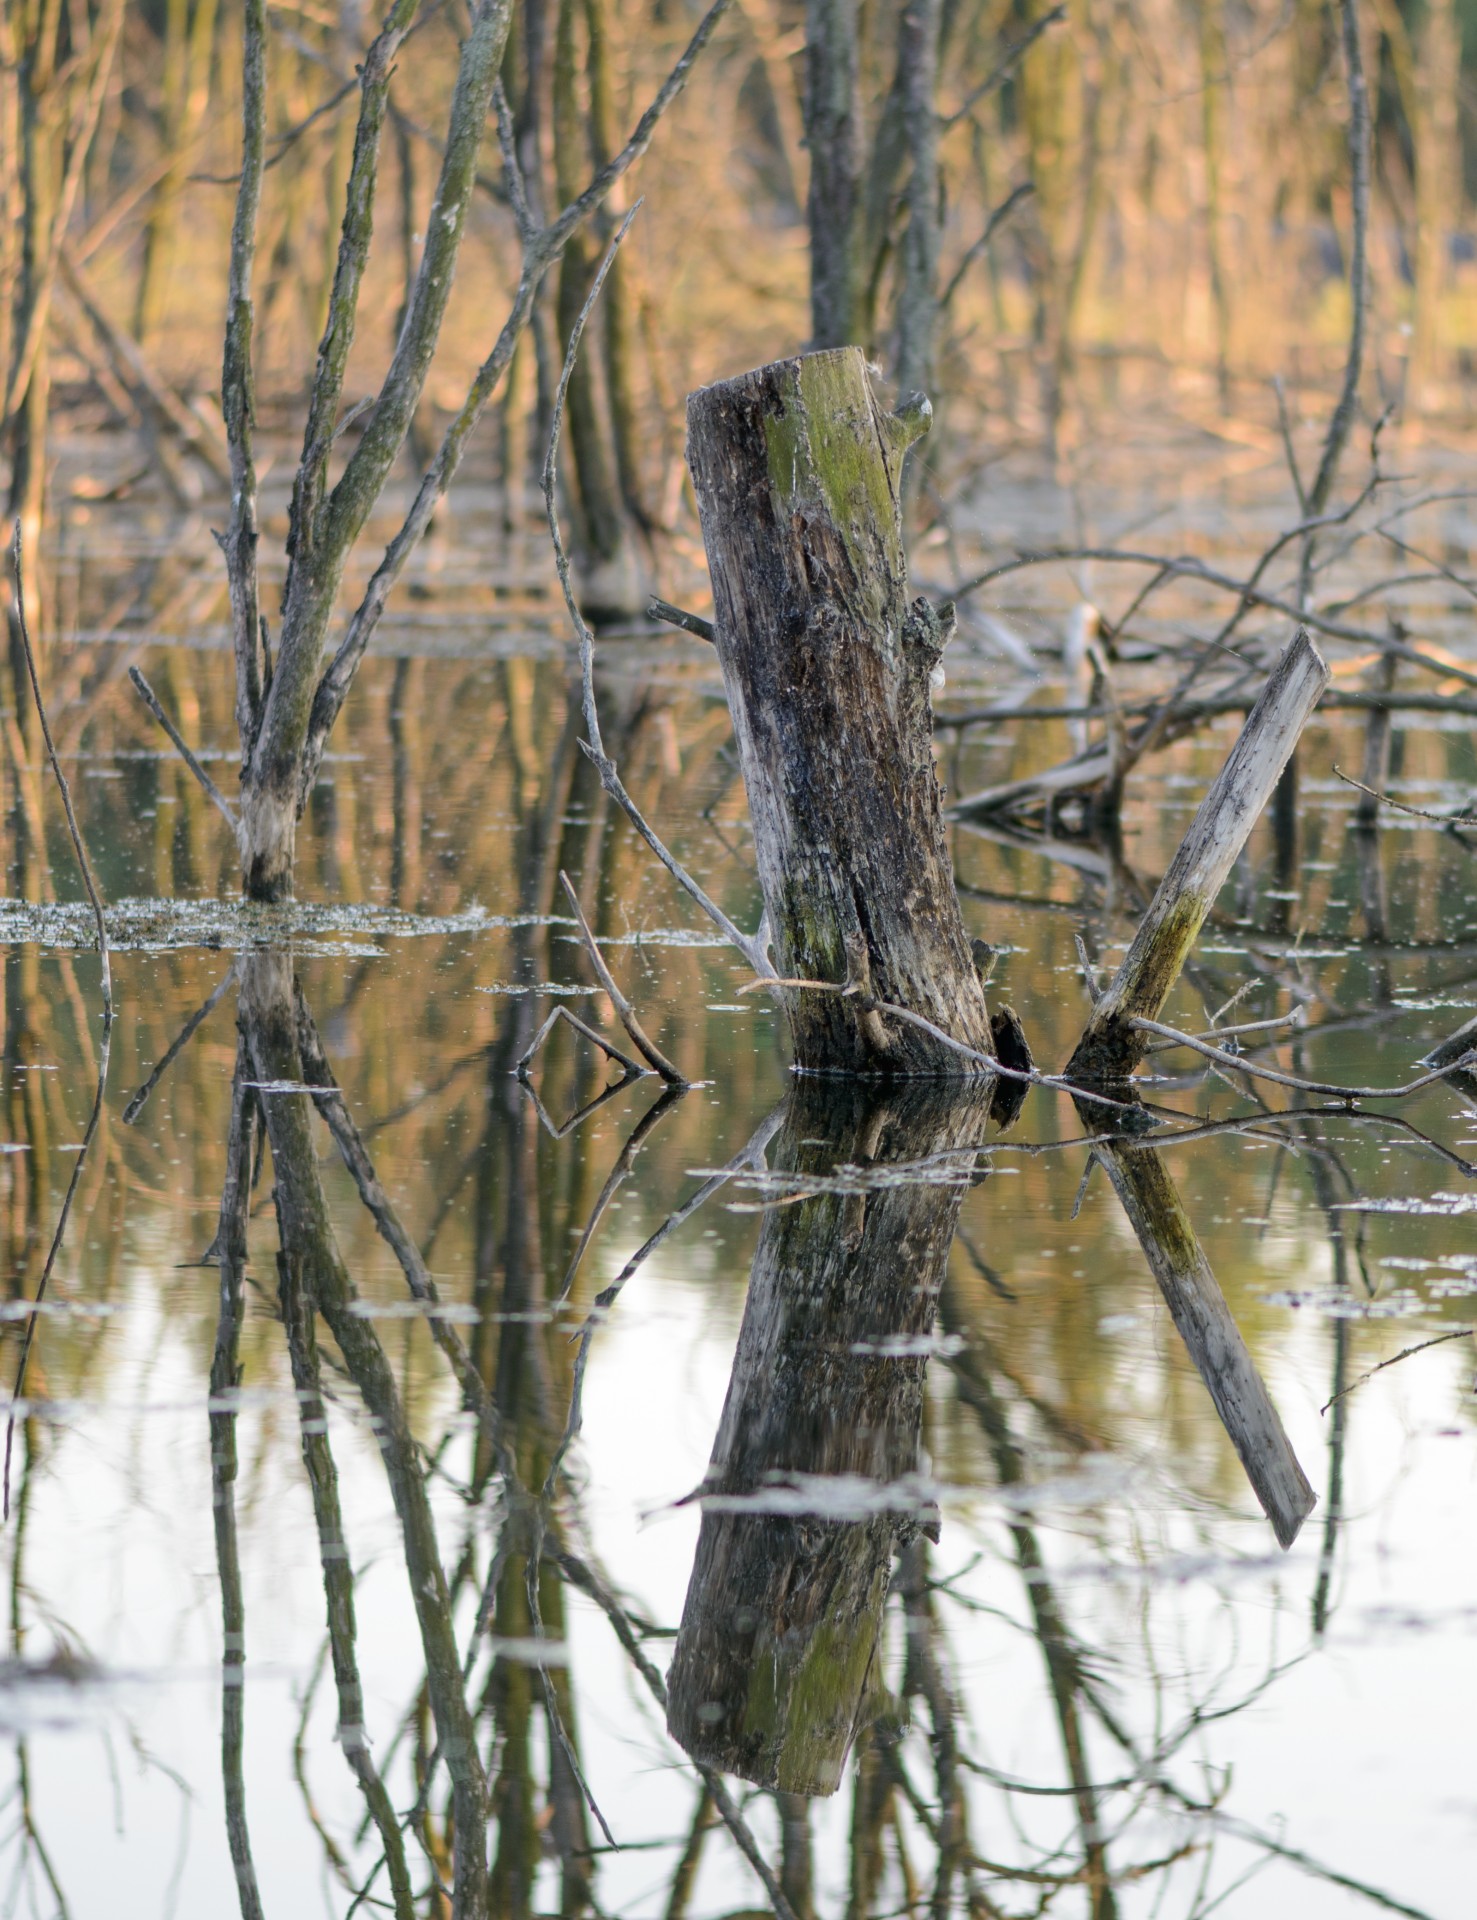 Torso of tree in swamp